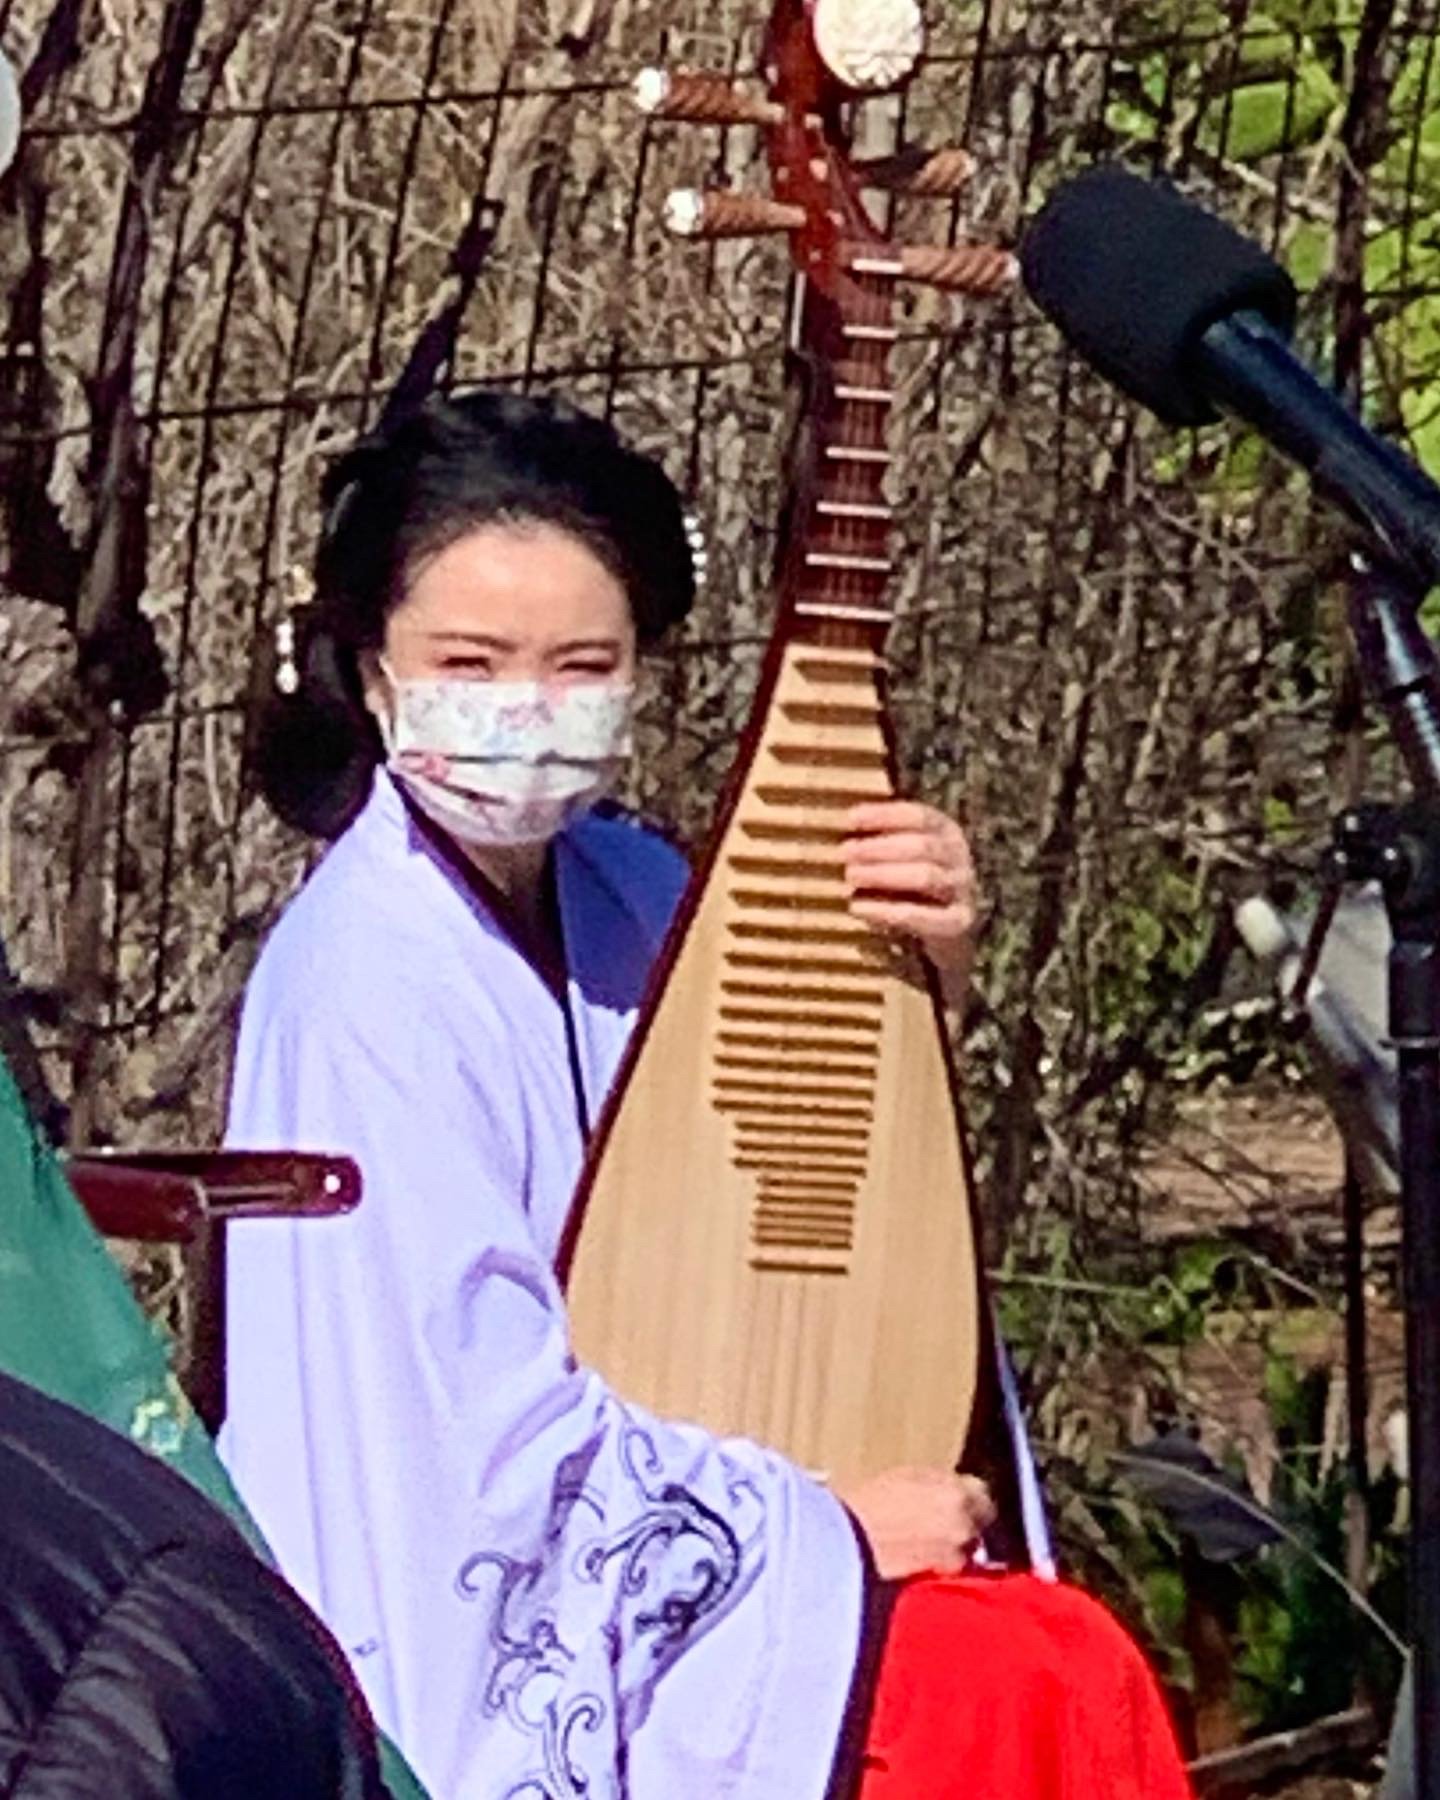 2022 Feb 5-Lunar New Year-Chinese musician and instrument.jpg (RP).jpg